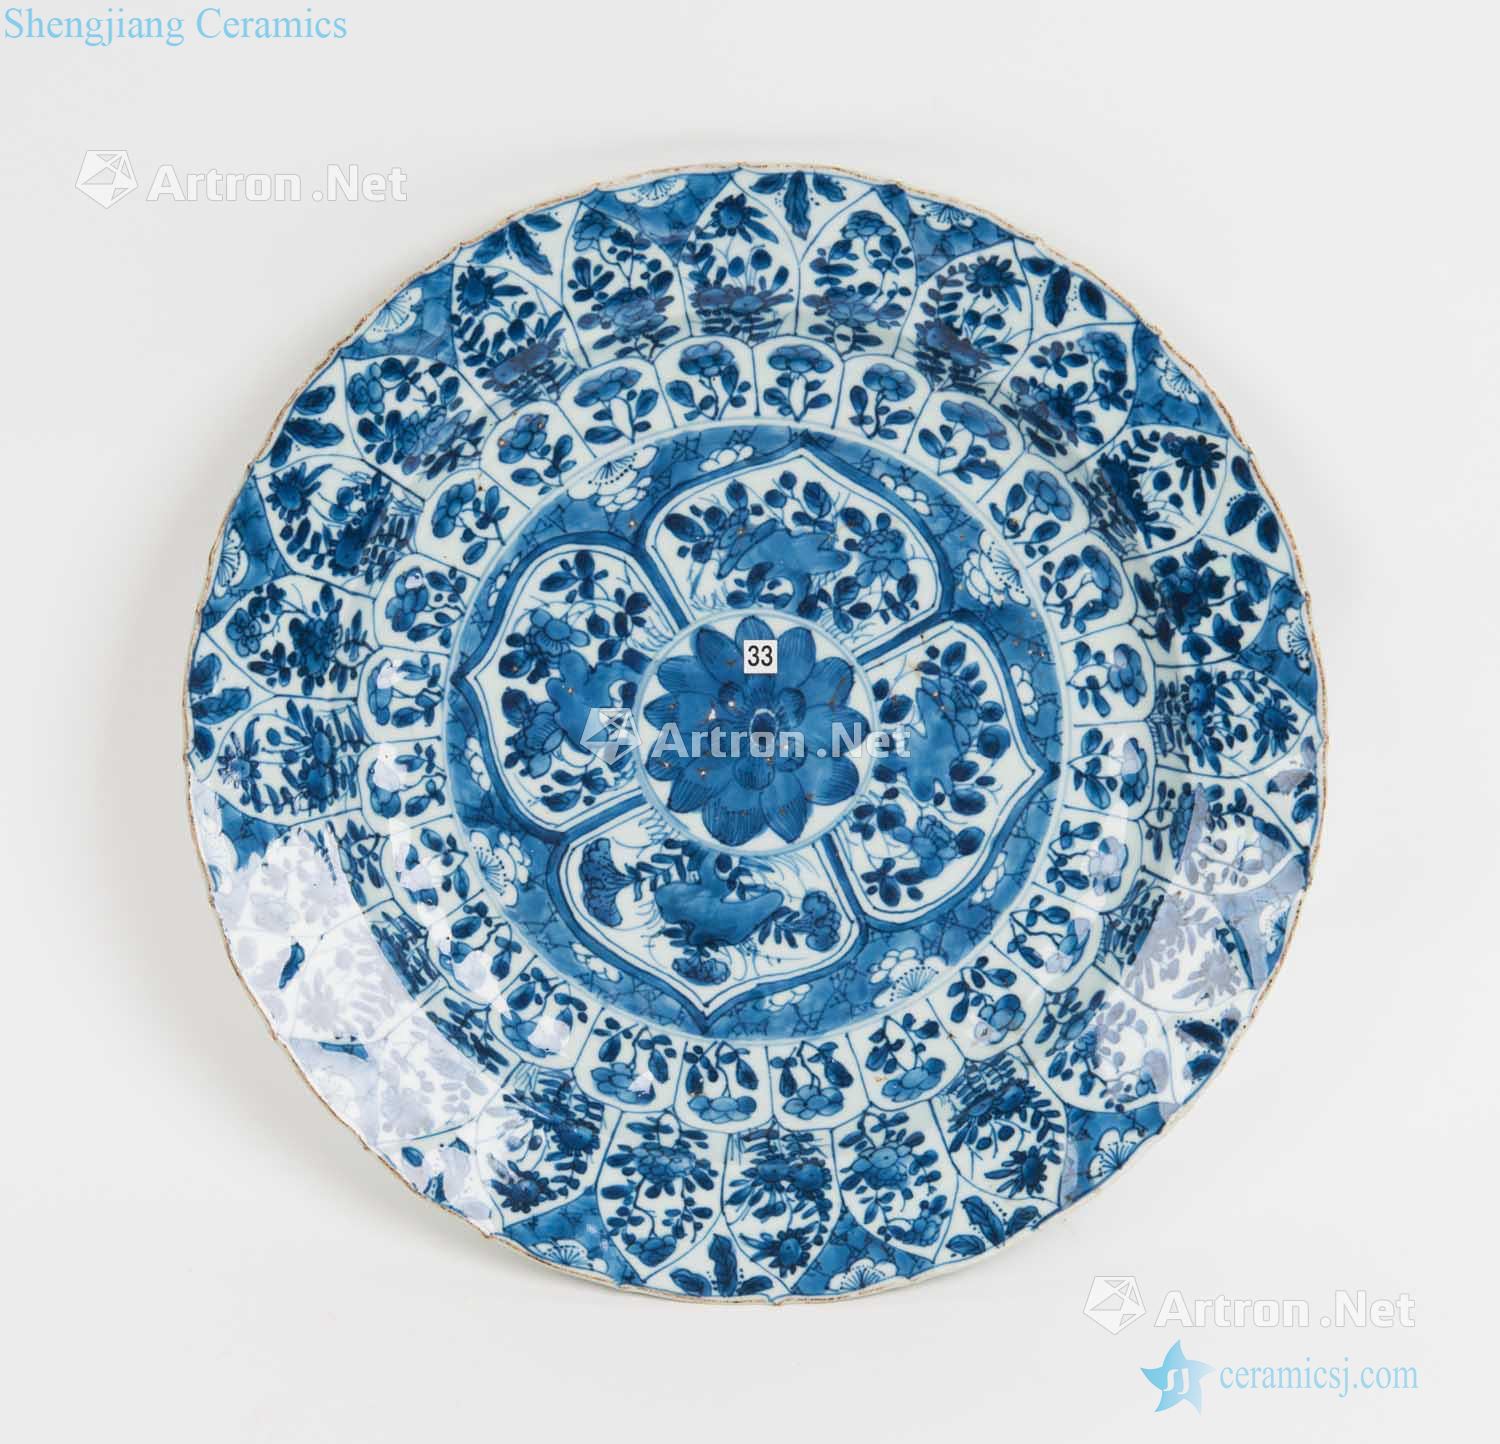 The qing emperor kangxi porcelain plate